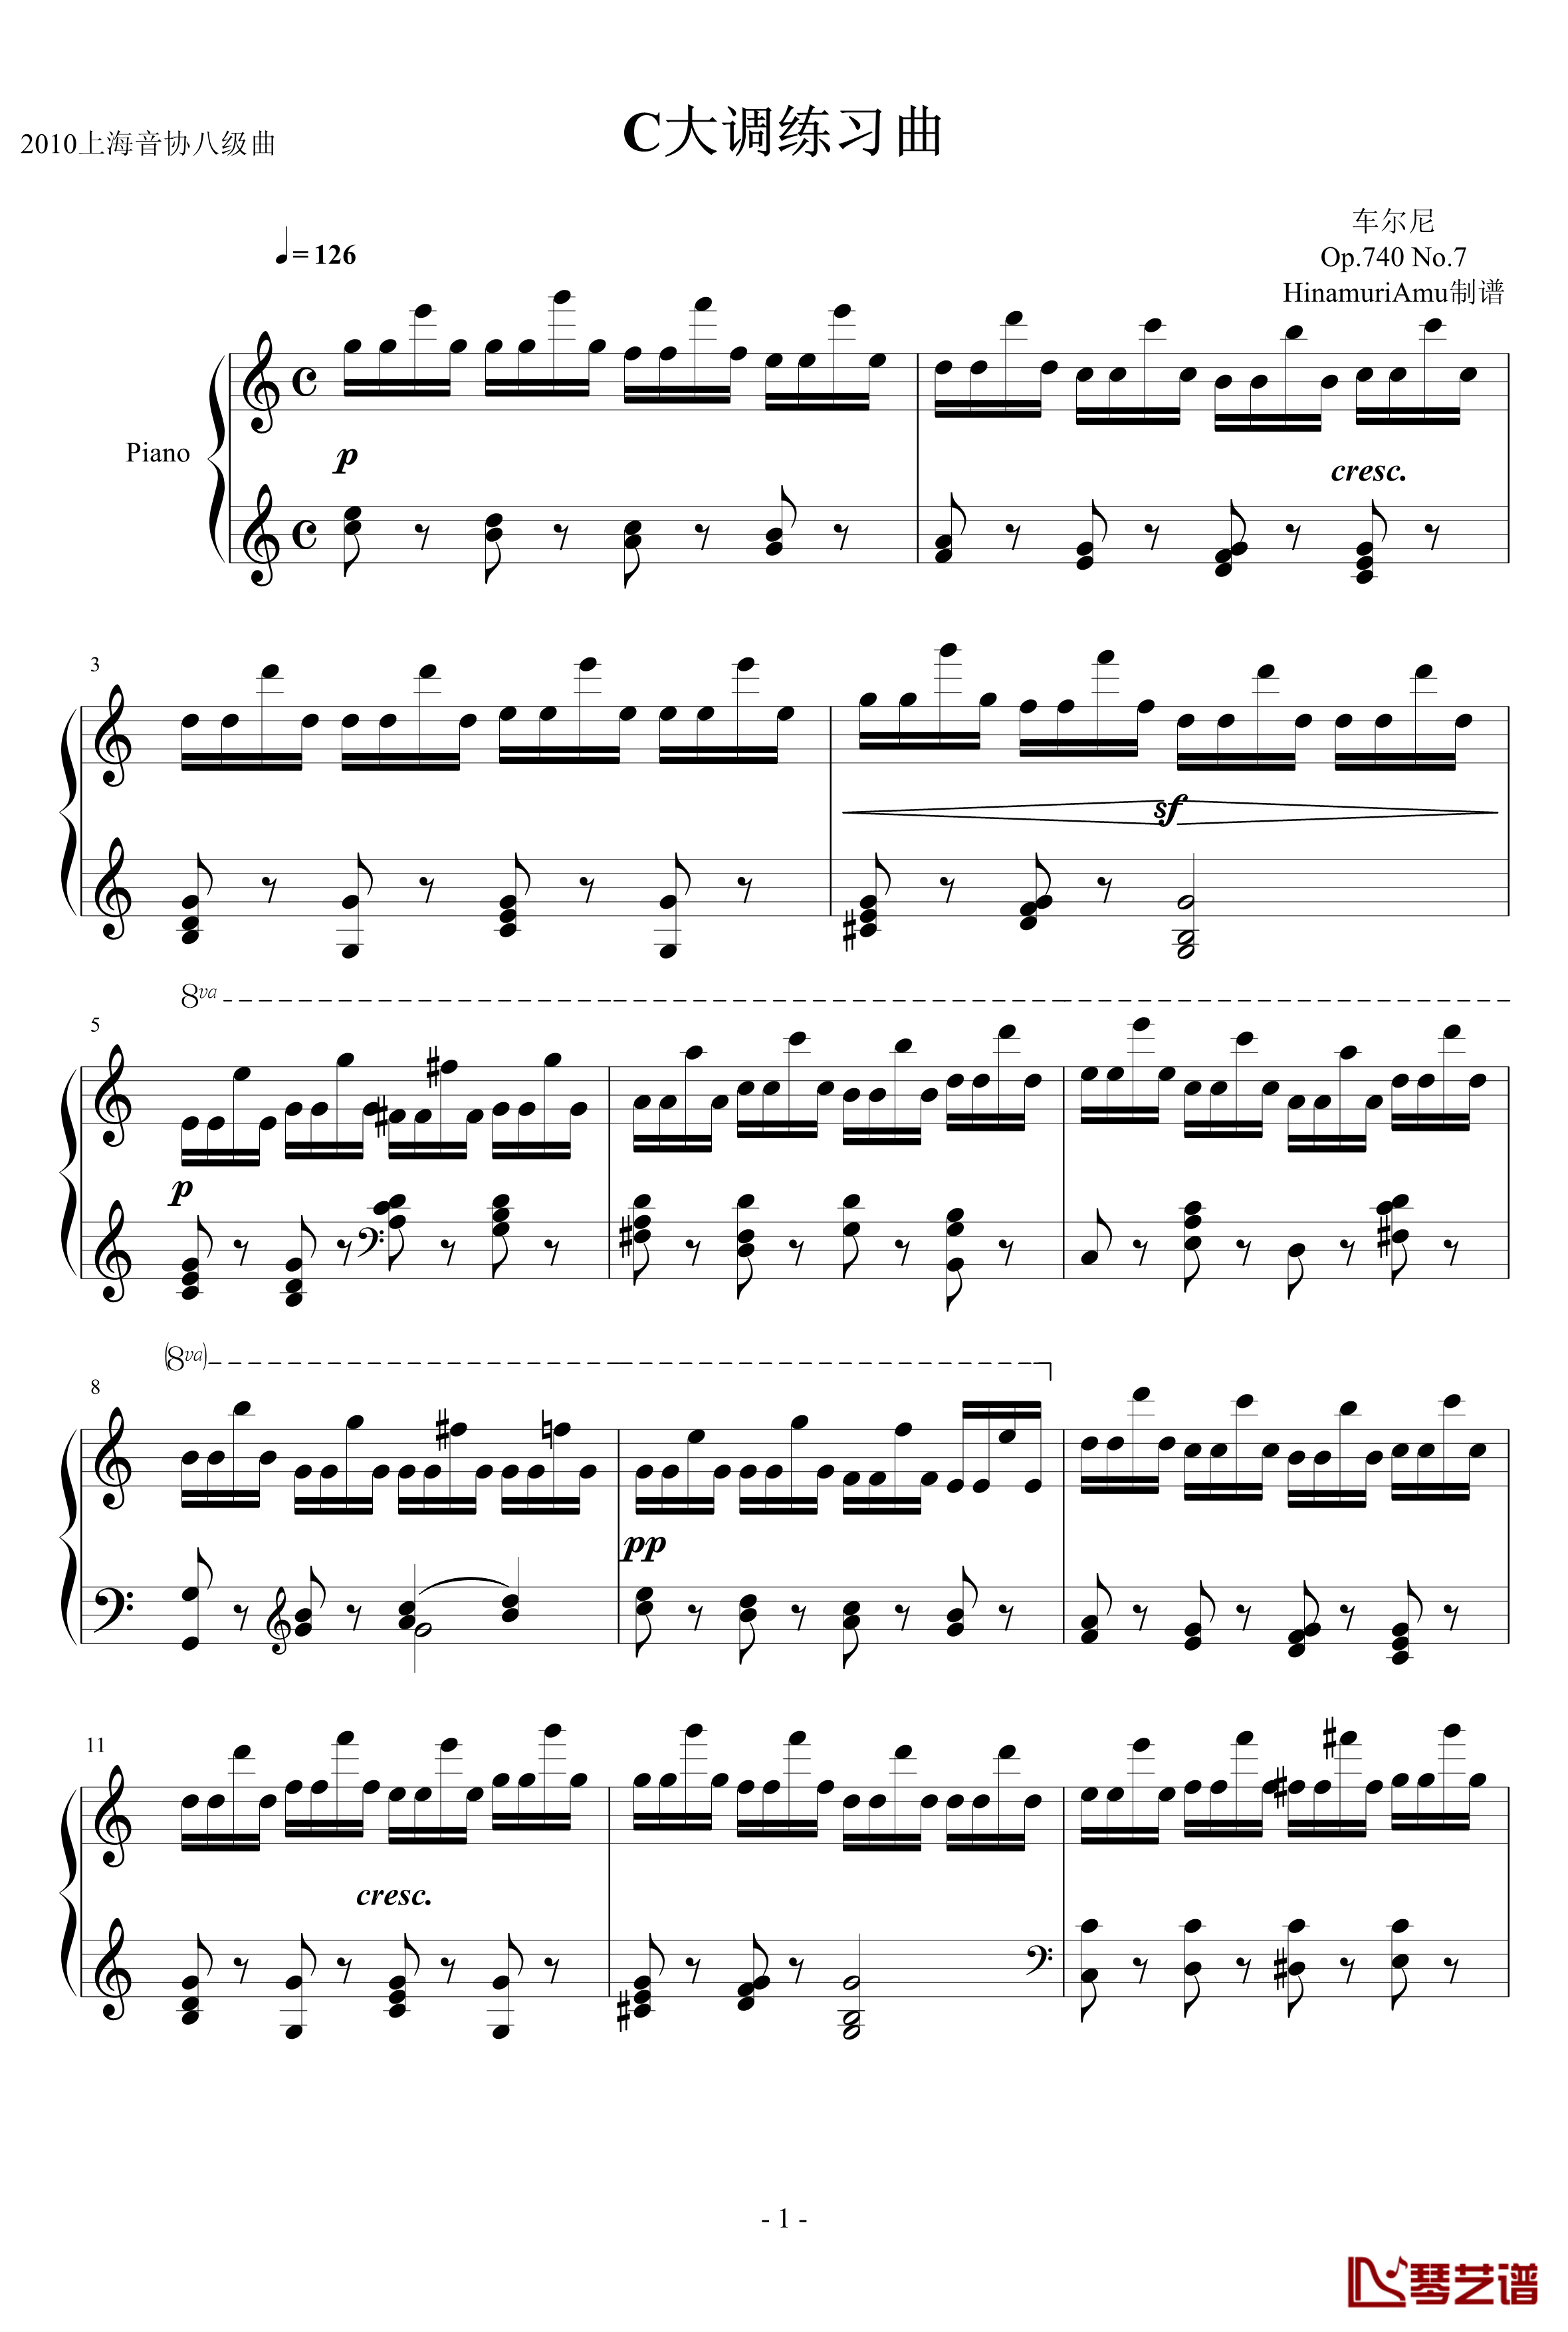 C大调练习曲钢琴谱-车尔尼Op740 No7-车尔尼-Czerny1